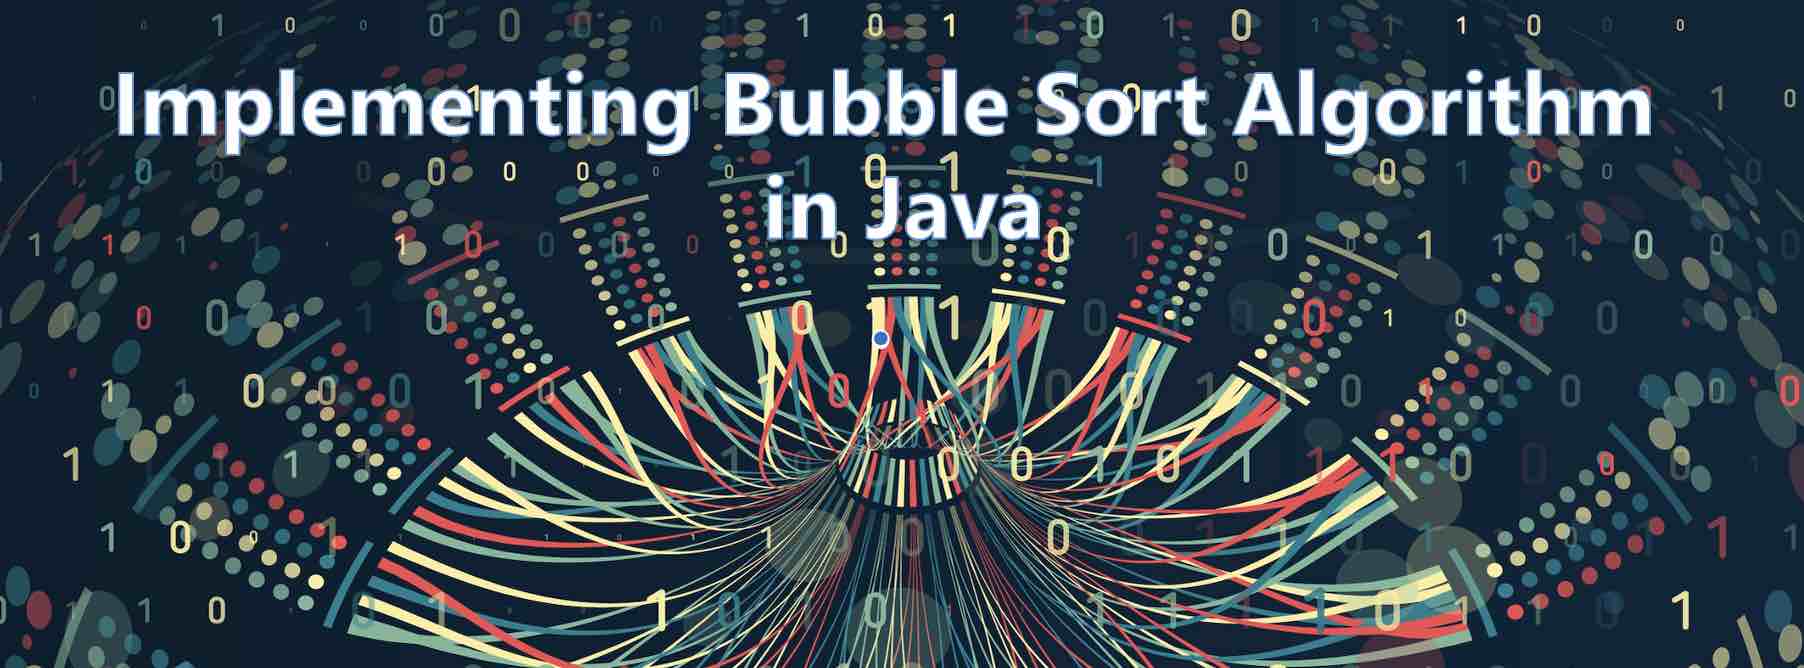 Implementing Bubble Sort Algorithm in Java